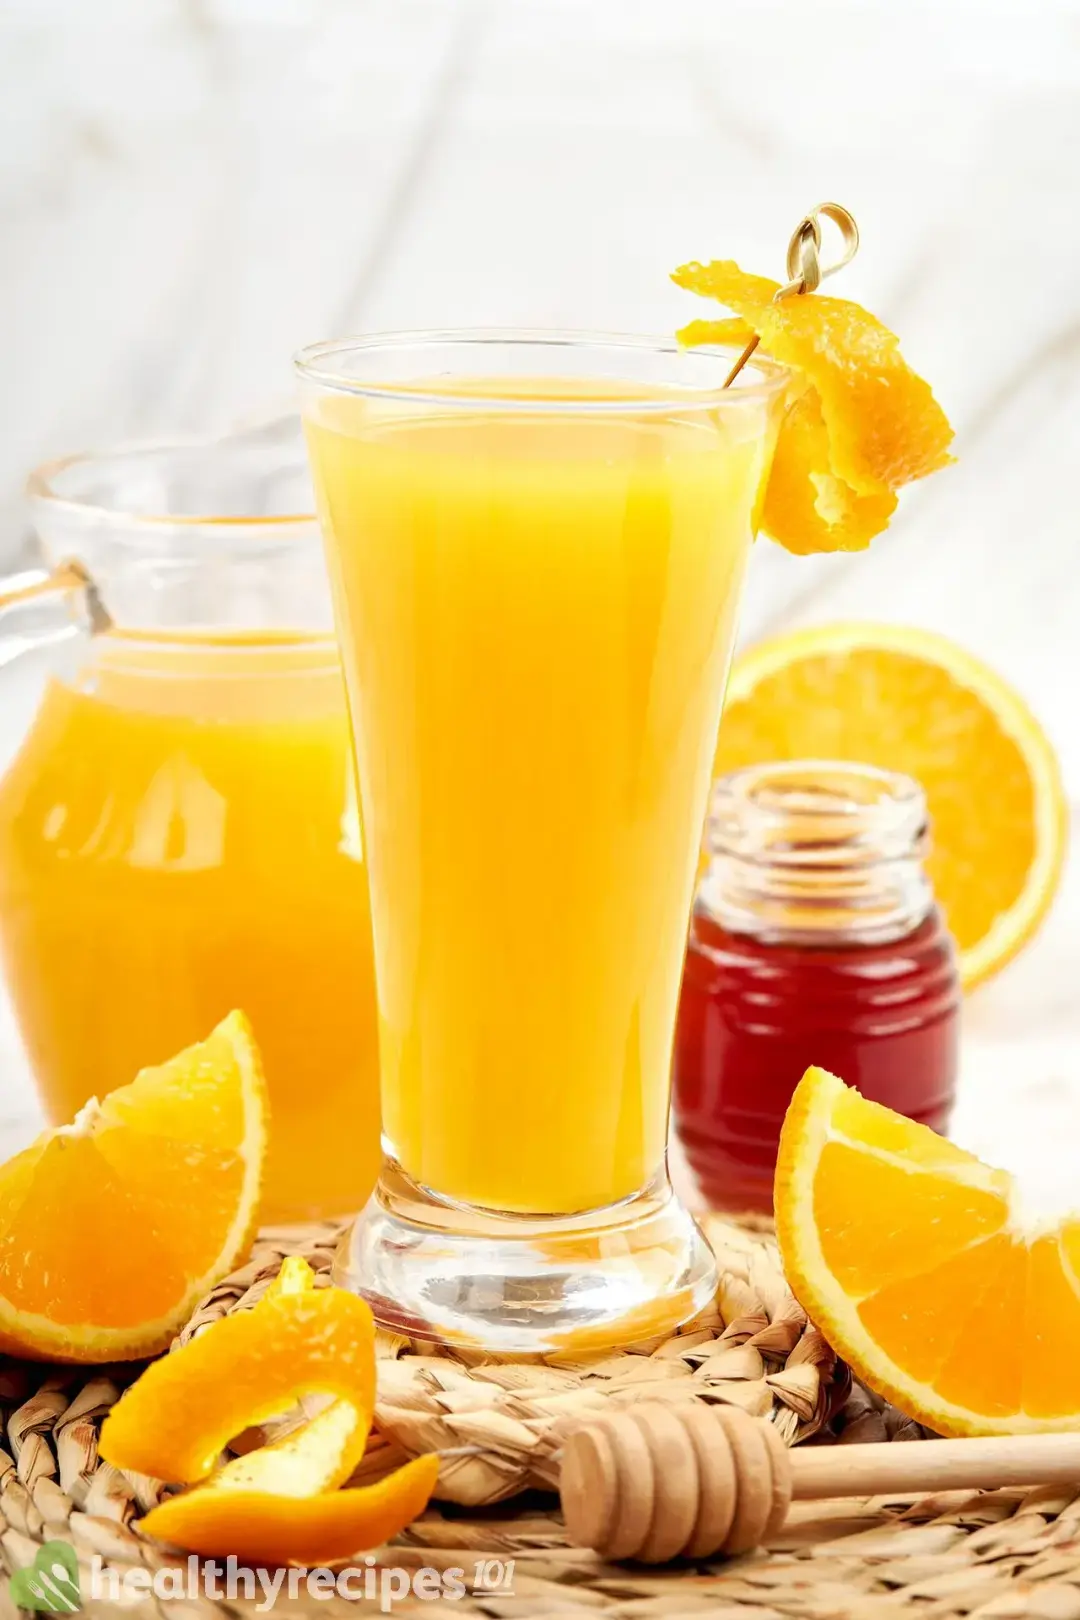 A glass of orange juice next to an orange juice pitcher, a honey jar, some orange wedges, and orange 